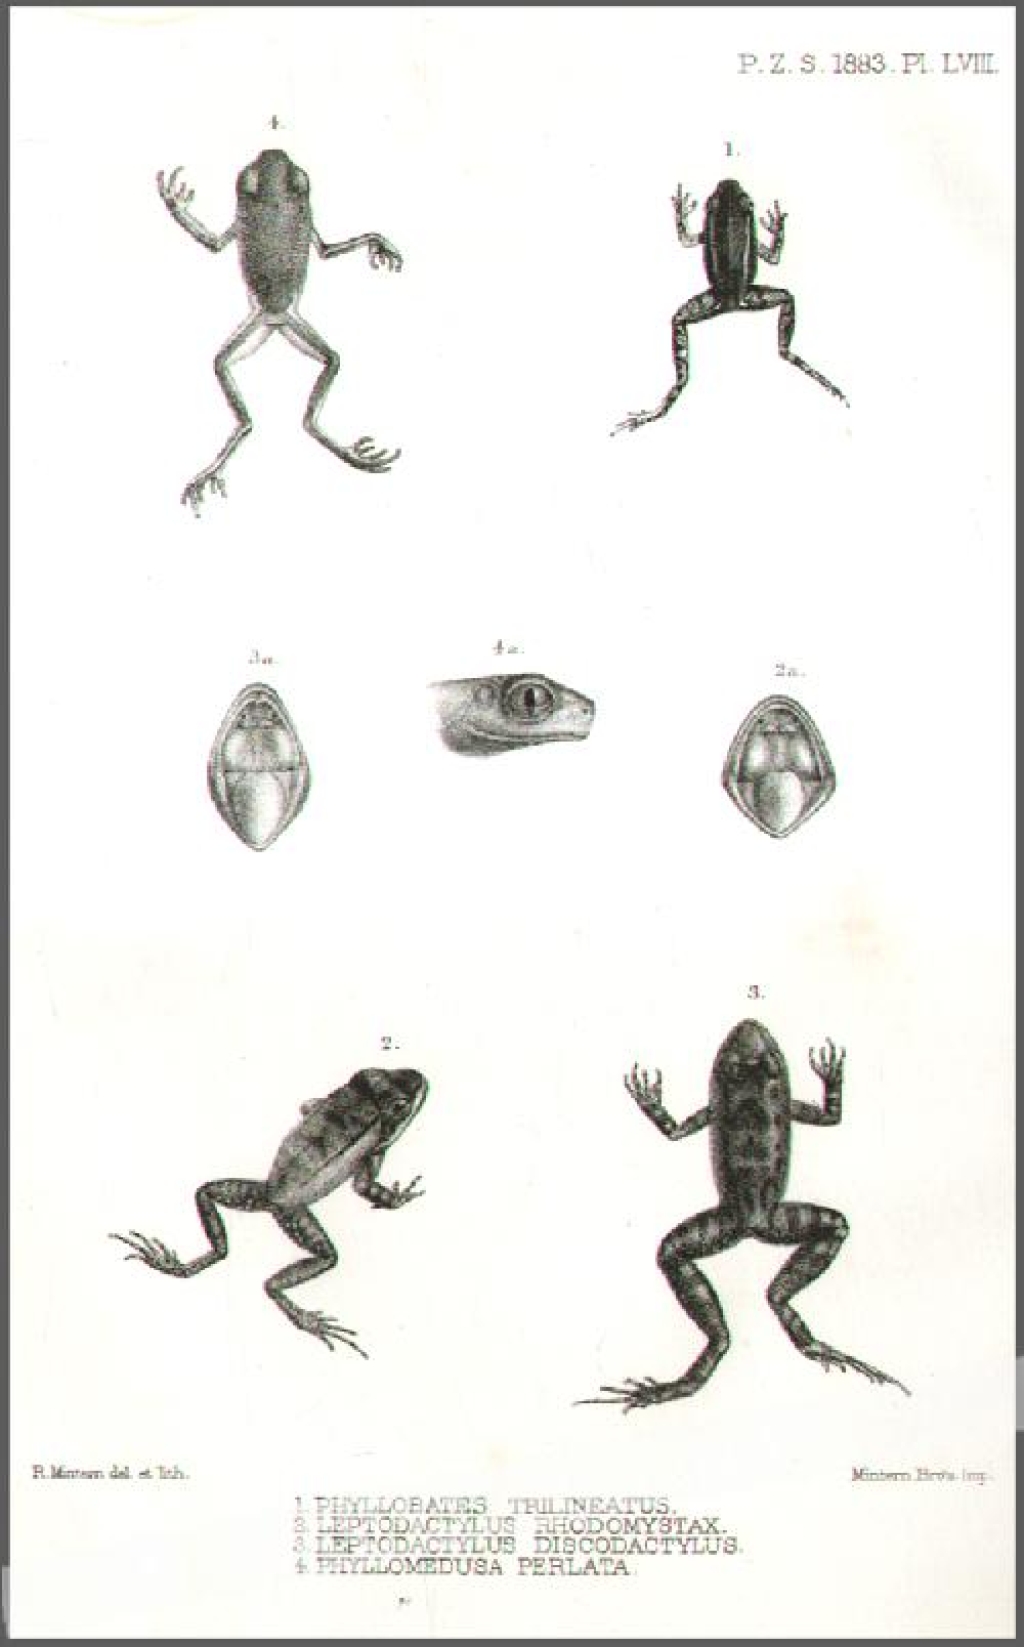 [rycina, 1883] 1. Phyllobates Trilineatus2. Leptodactylus Rhodomystax3. Leptodactylus Discodactylus4. Phyllomedusa Perlata  [żaby, Ameryka Południowa]